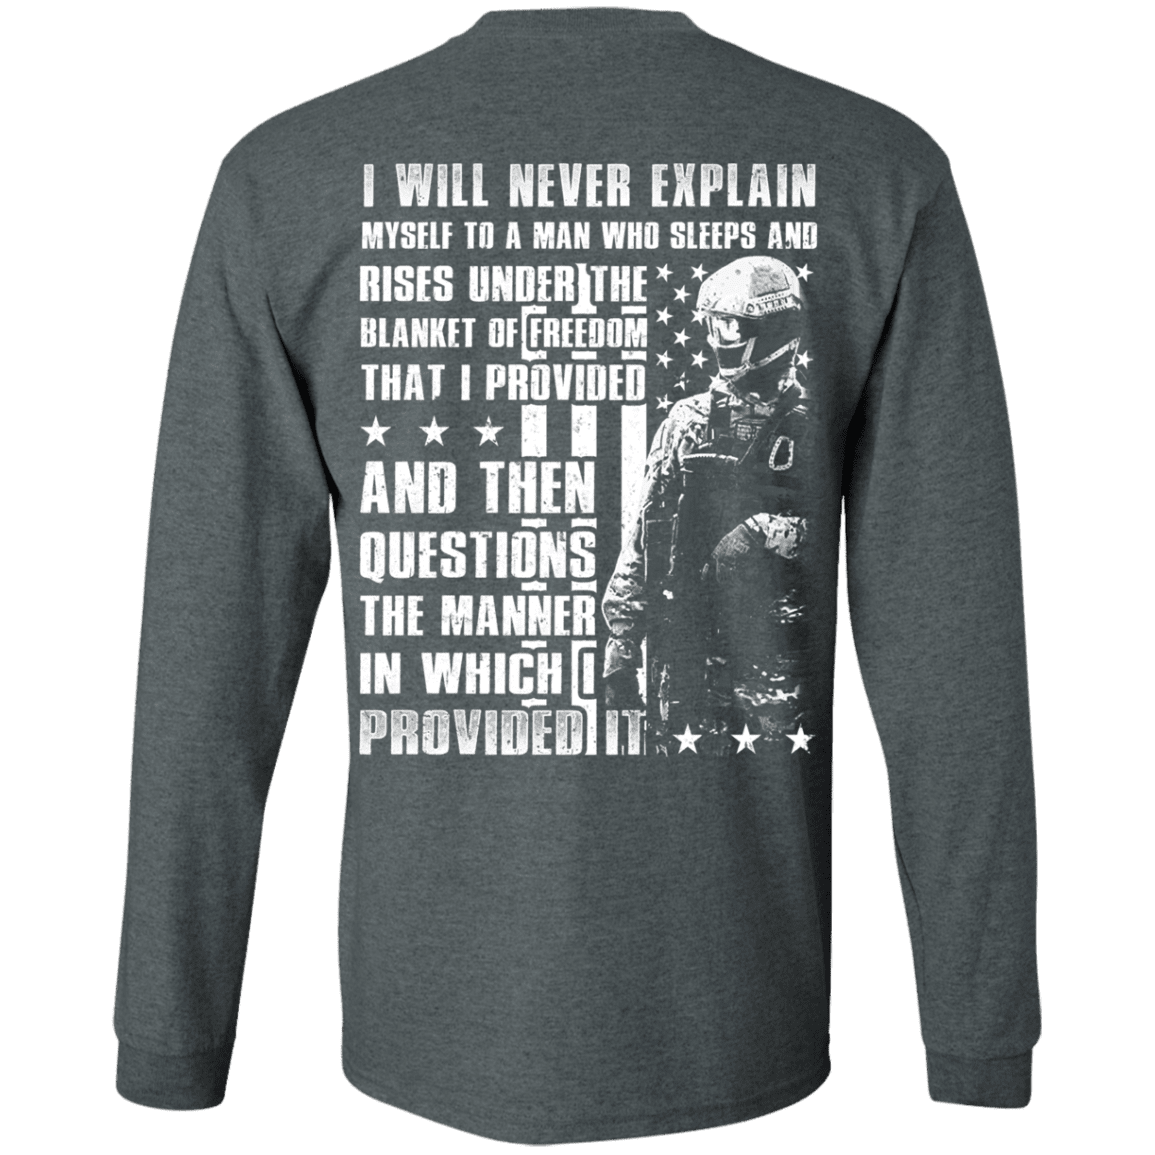 Military T-Shirt "Veteran - I Will Never Explain Myself To A Man" - Men Back-TShirt-General-Veterans Nation